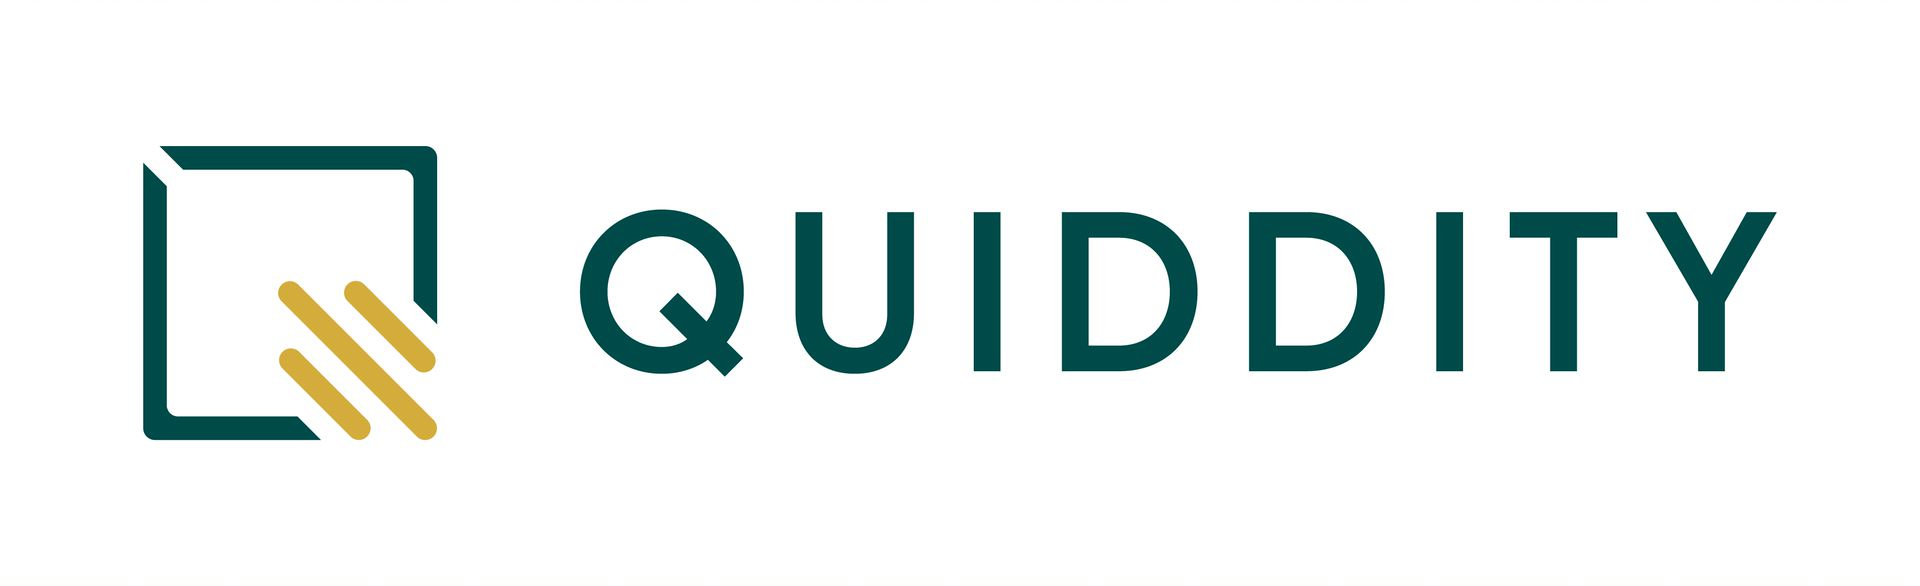 Quiddity Engineering, LLC. logo